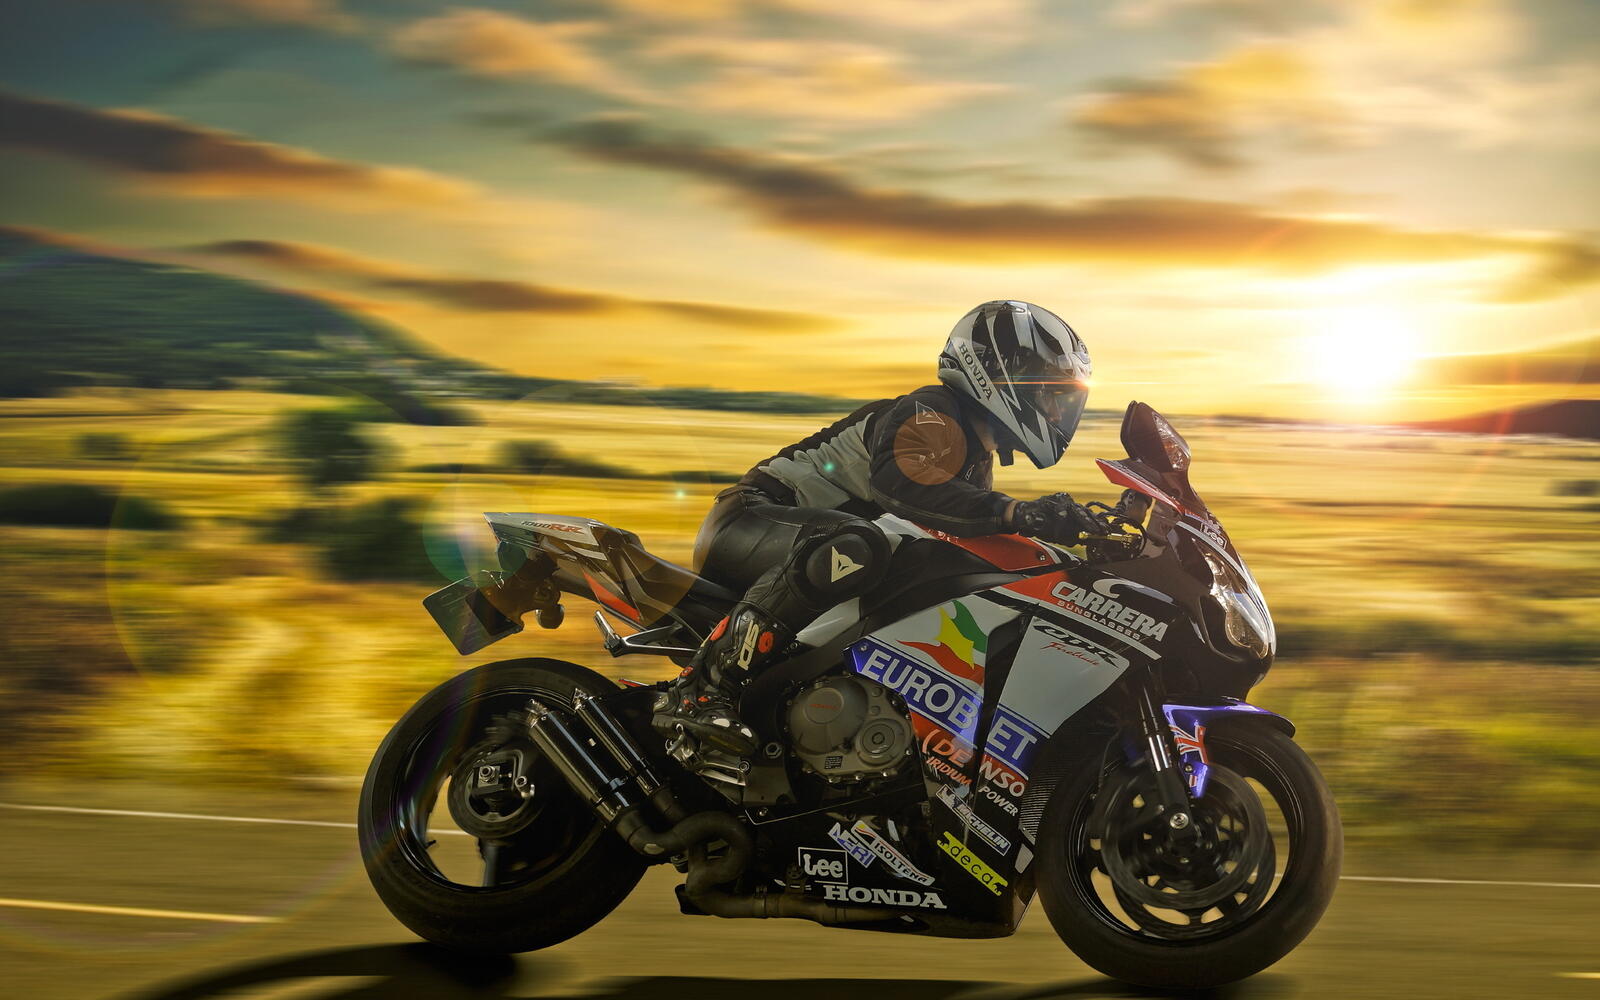 Бесплатное фото Спортивный мотоцикл Honda едет на закате